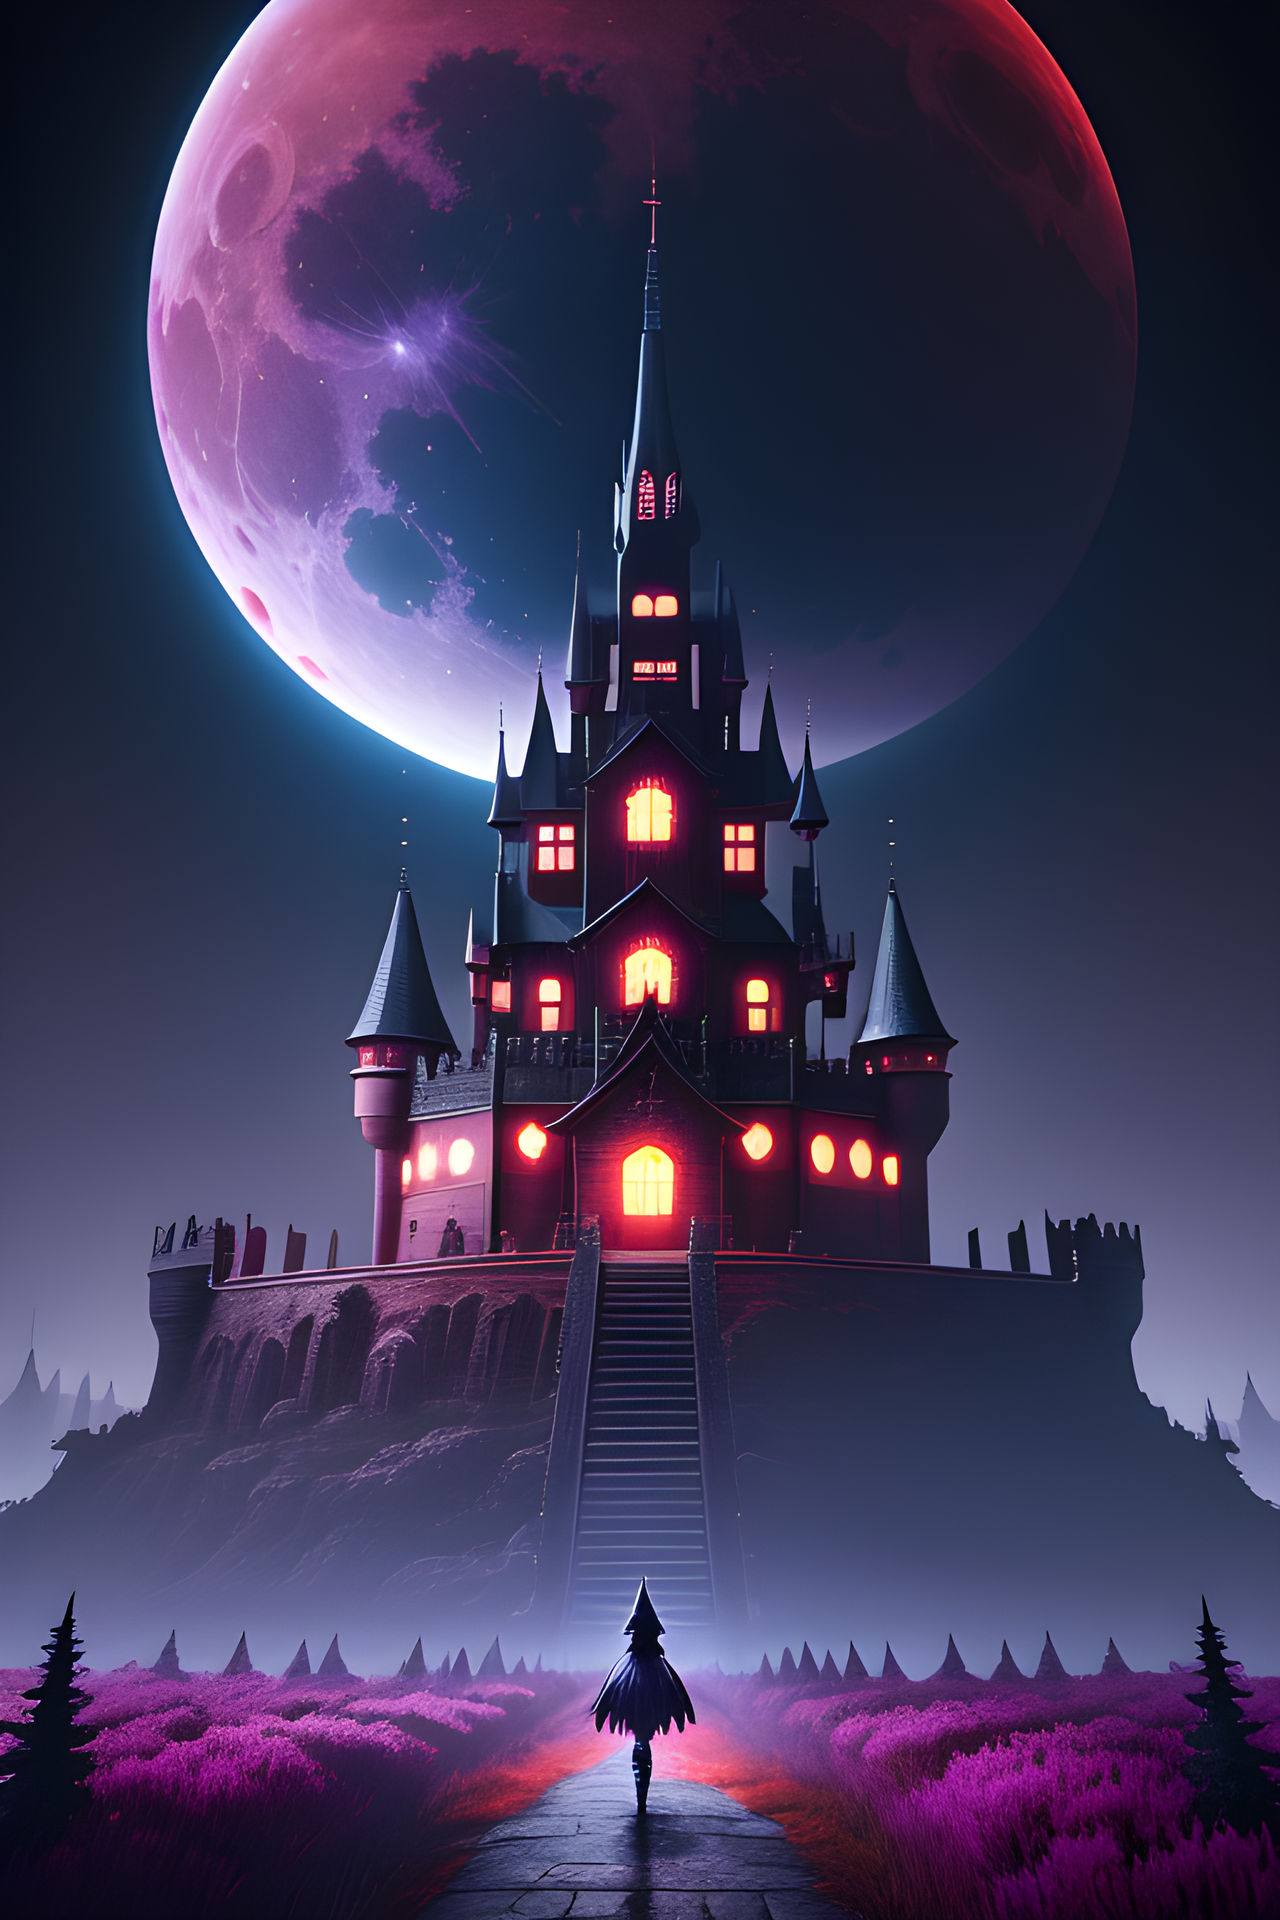 Dark lord castle by FinnFunn on DeviantArt